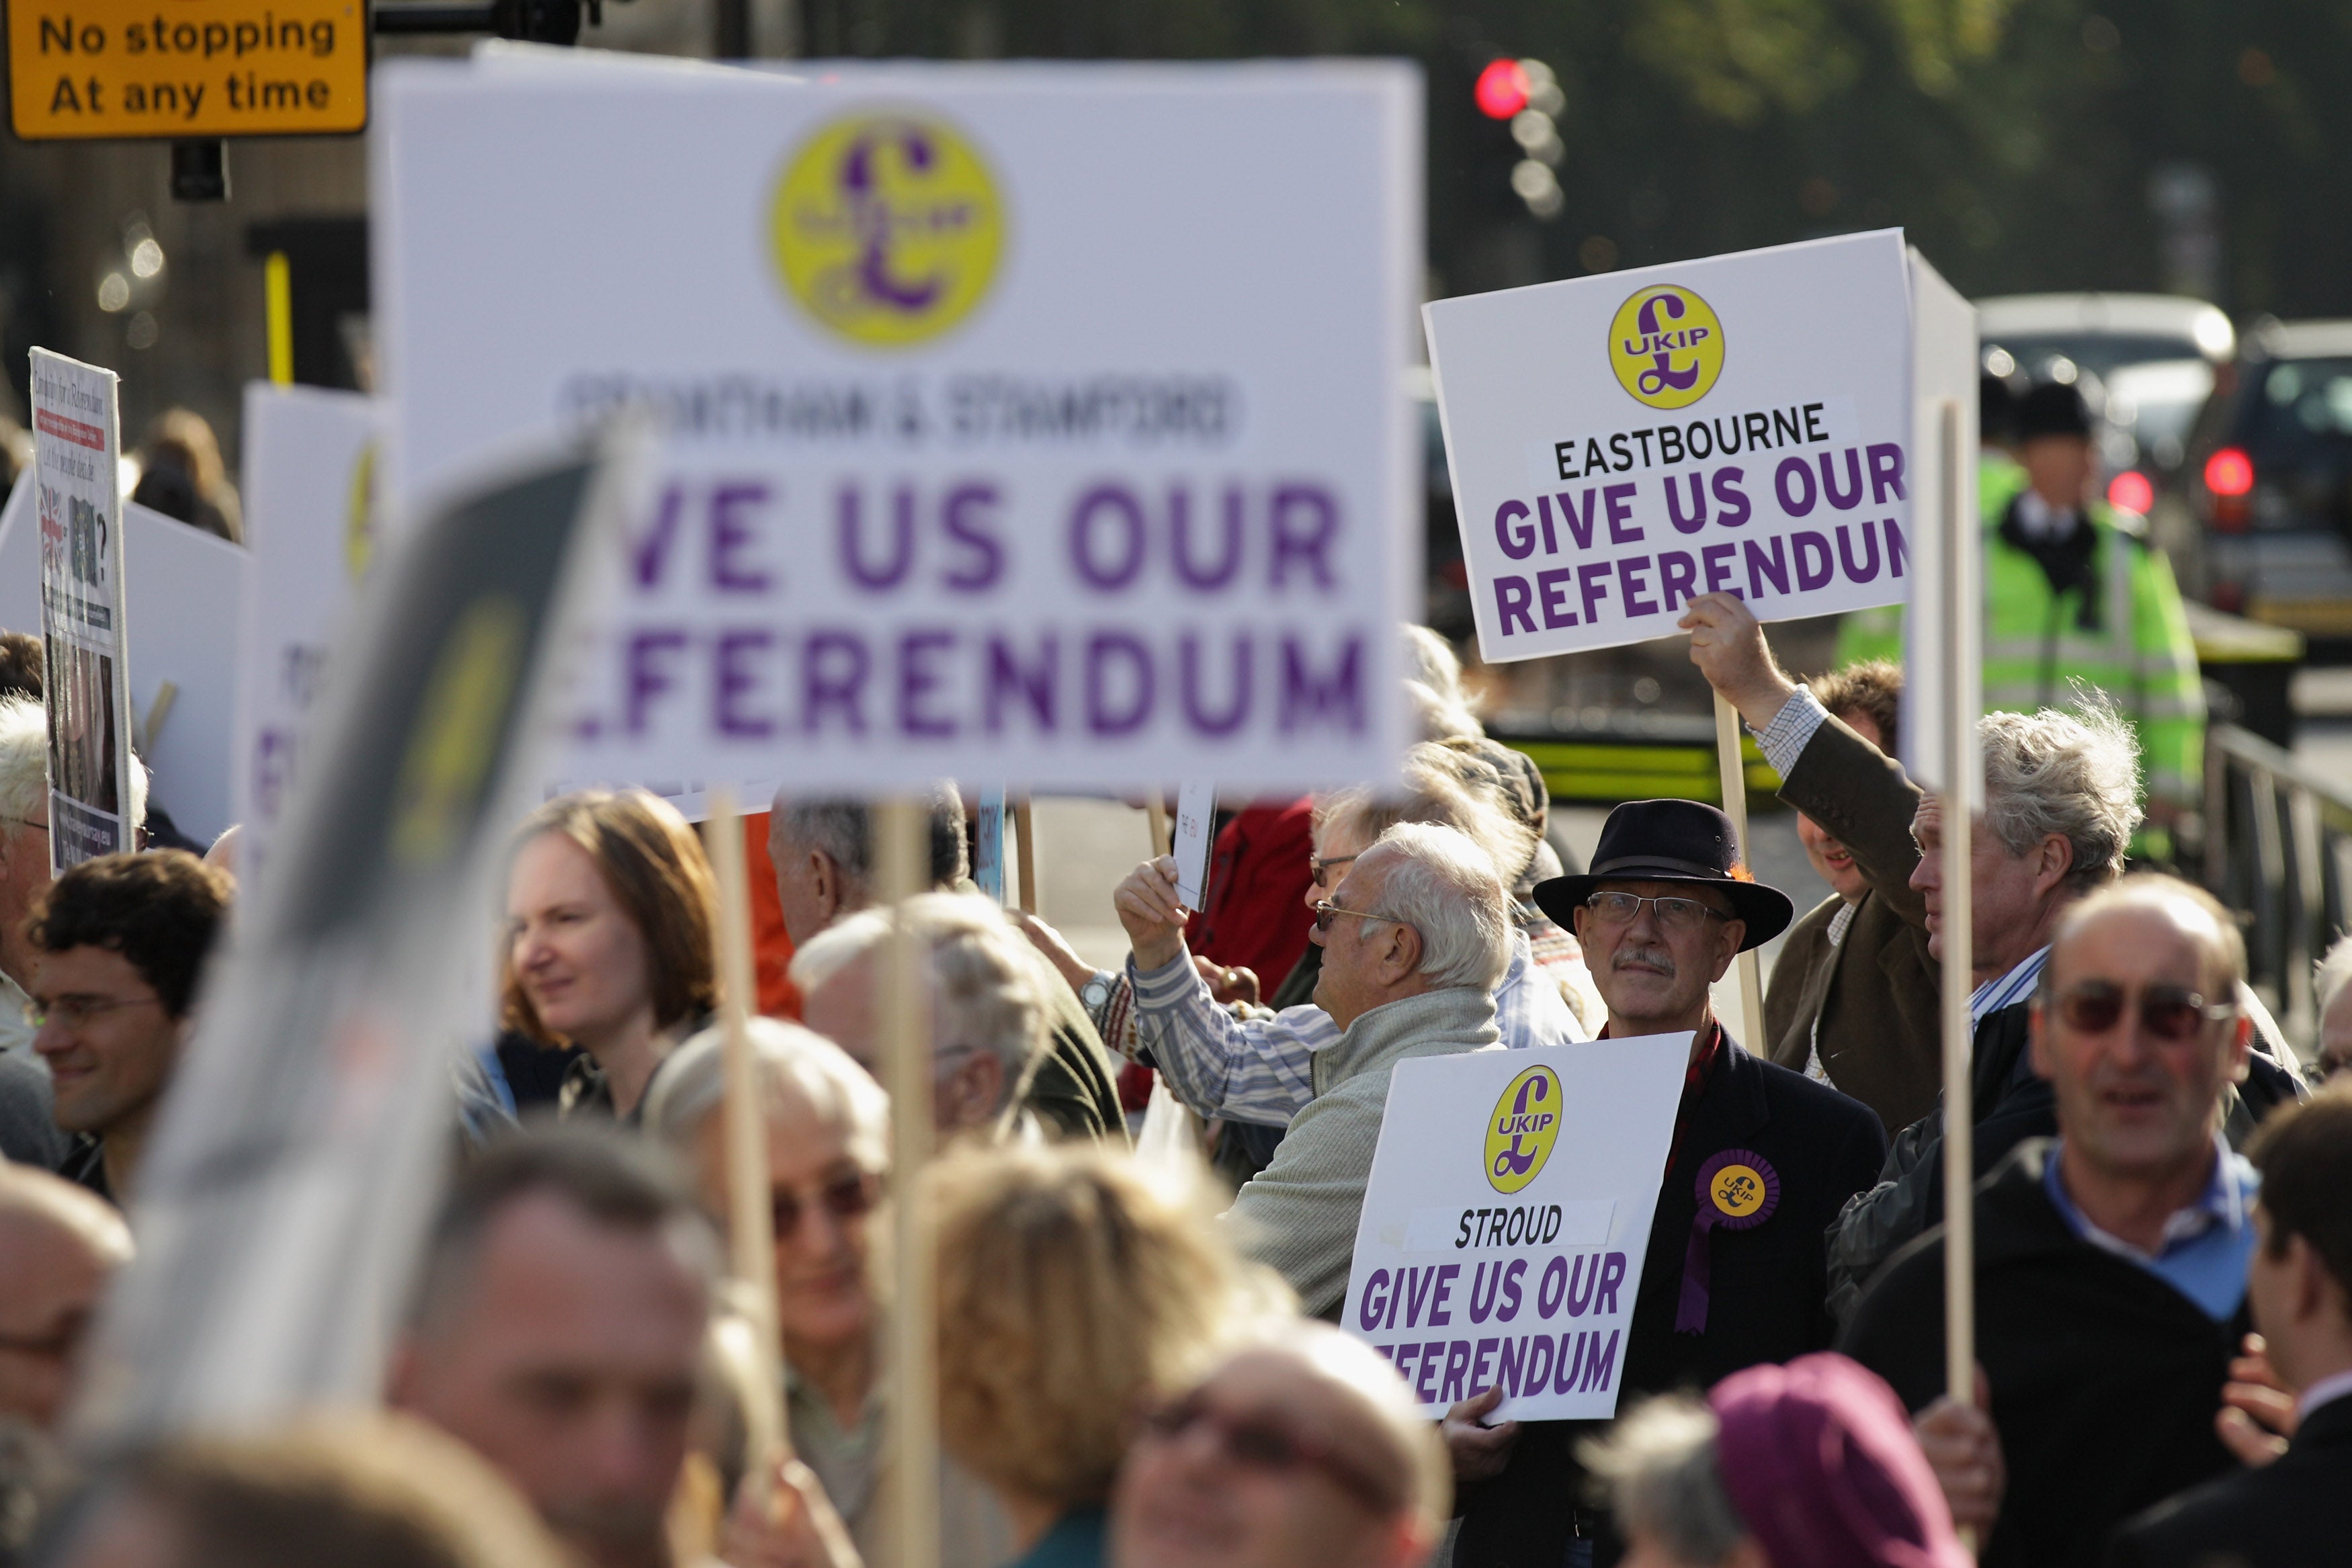 Ukip campaigners seek a referendum on the UK’s membership of the EU